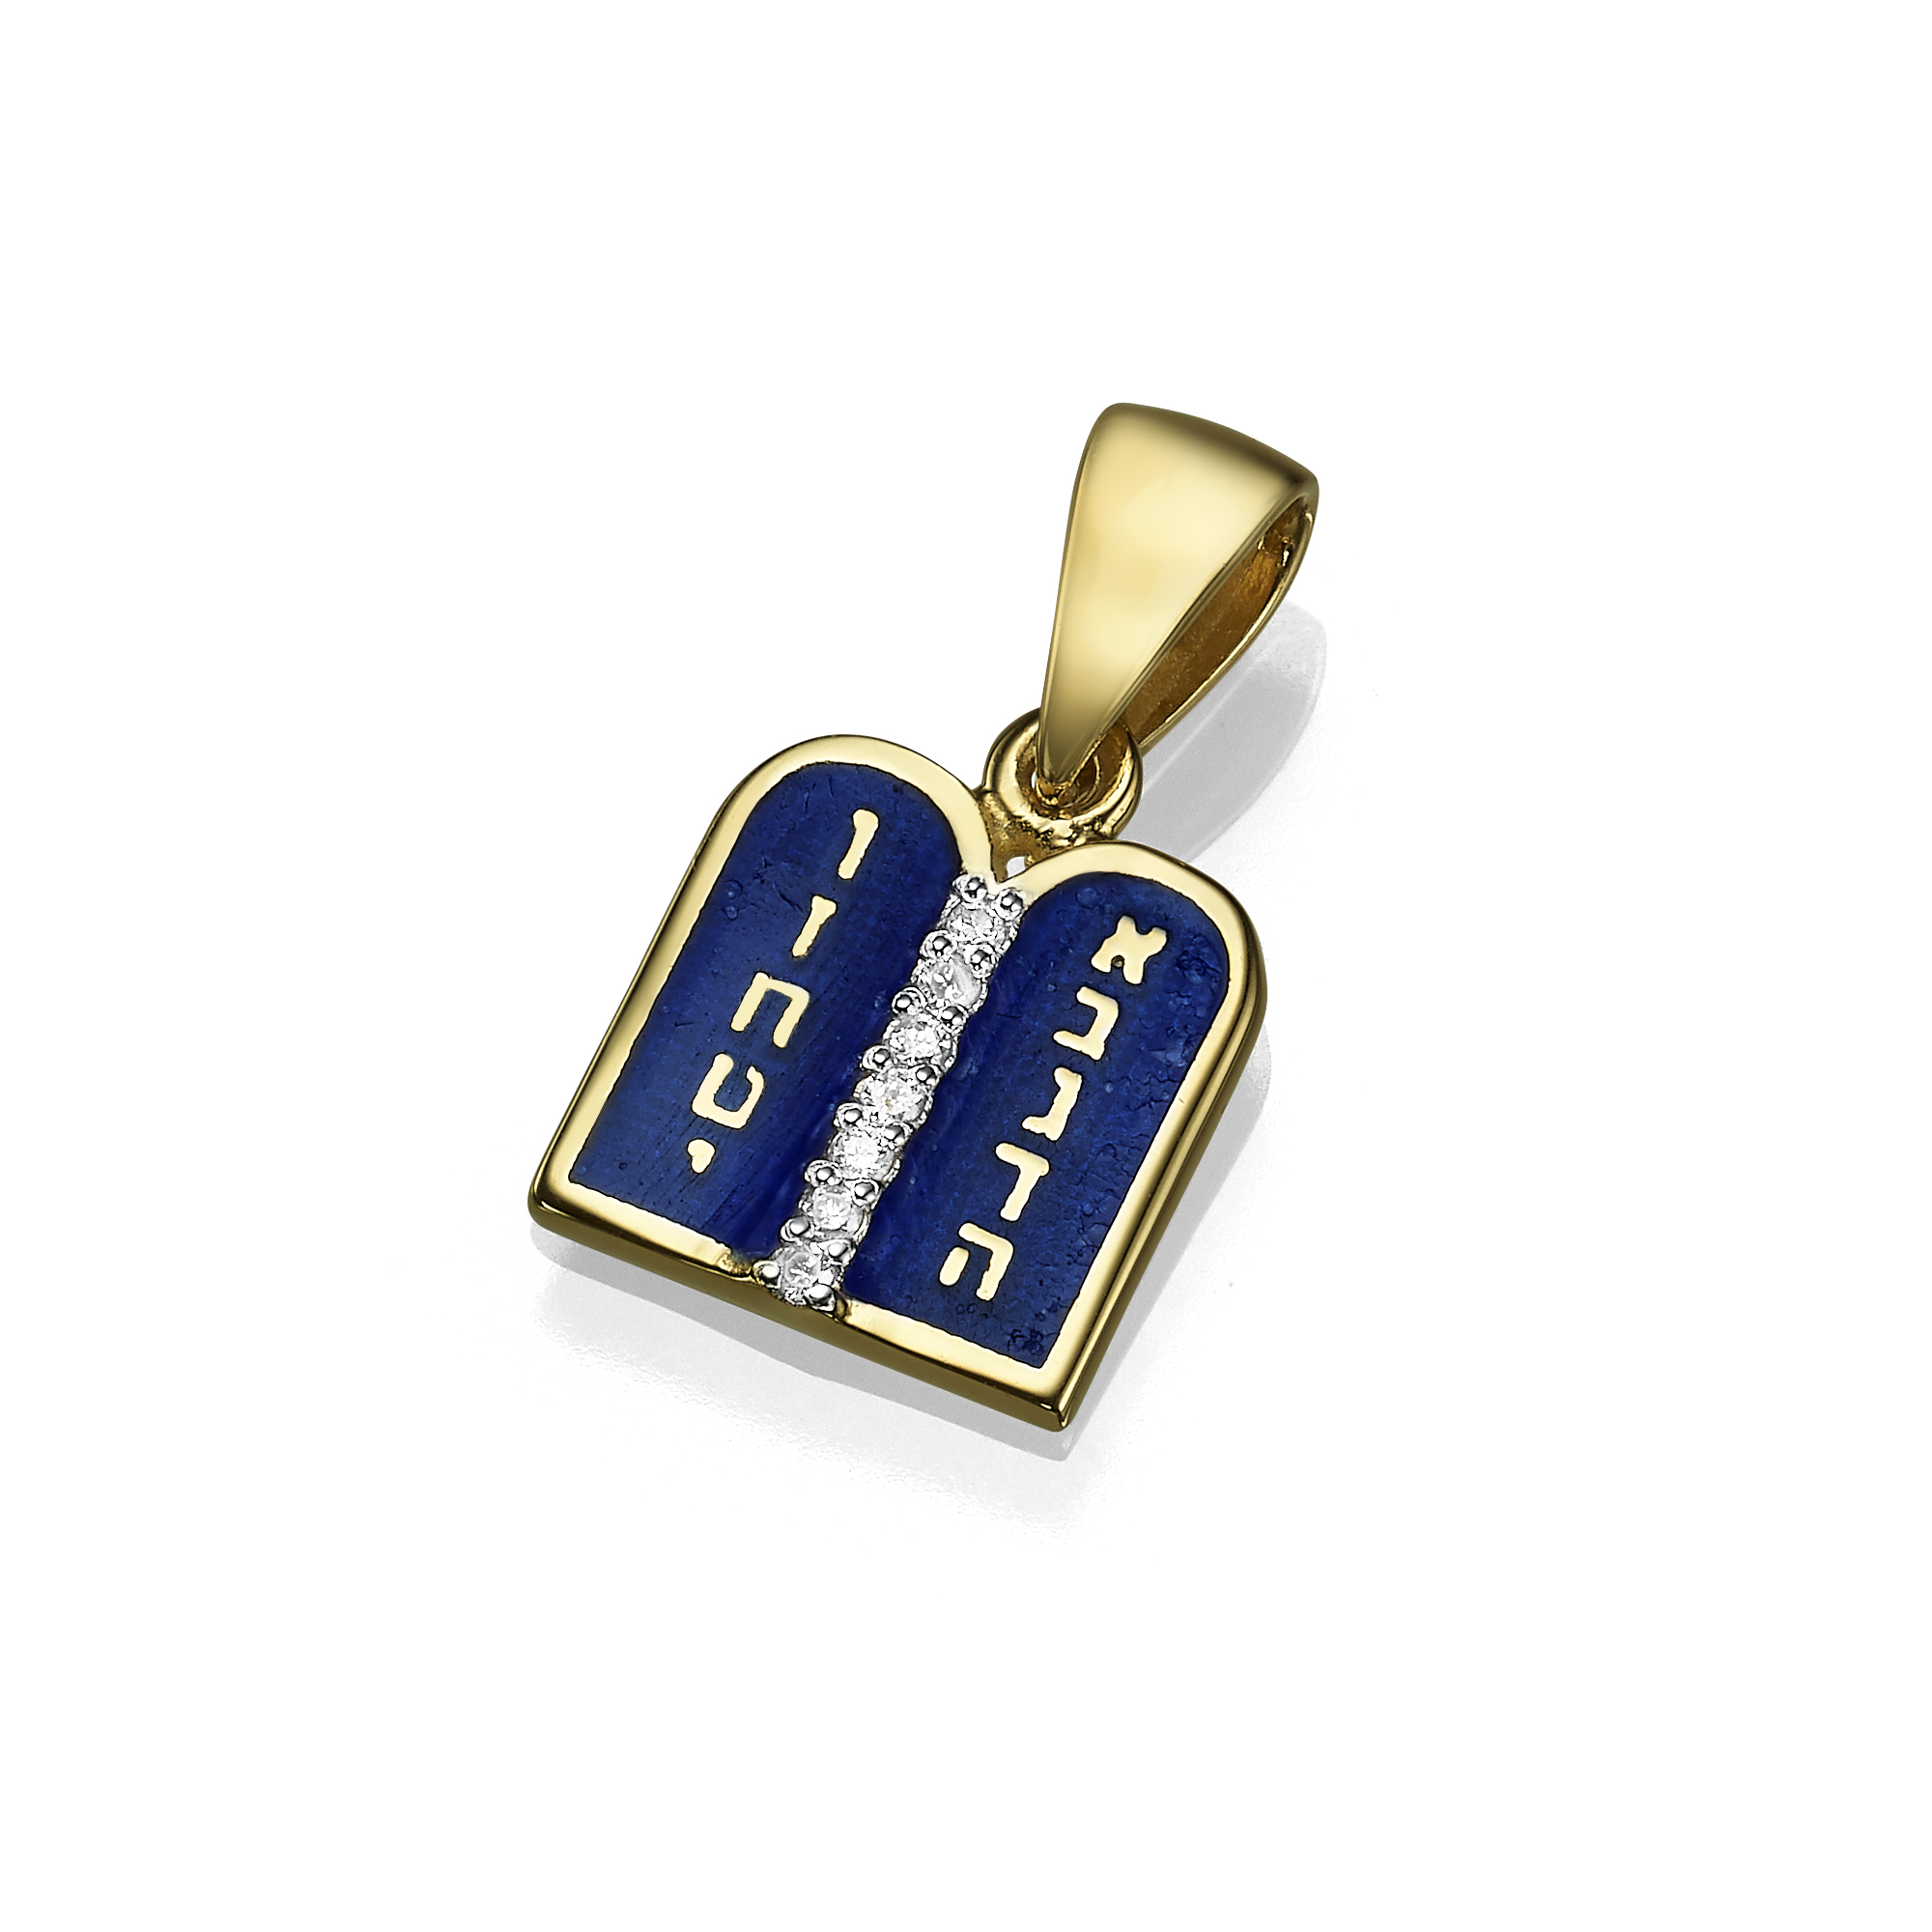 Ten Commandments Pendant – 14K Yellow Gold and Blue Enamel Diamond-Studded